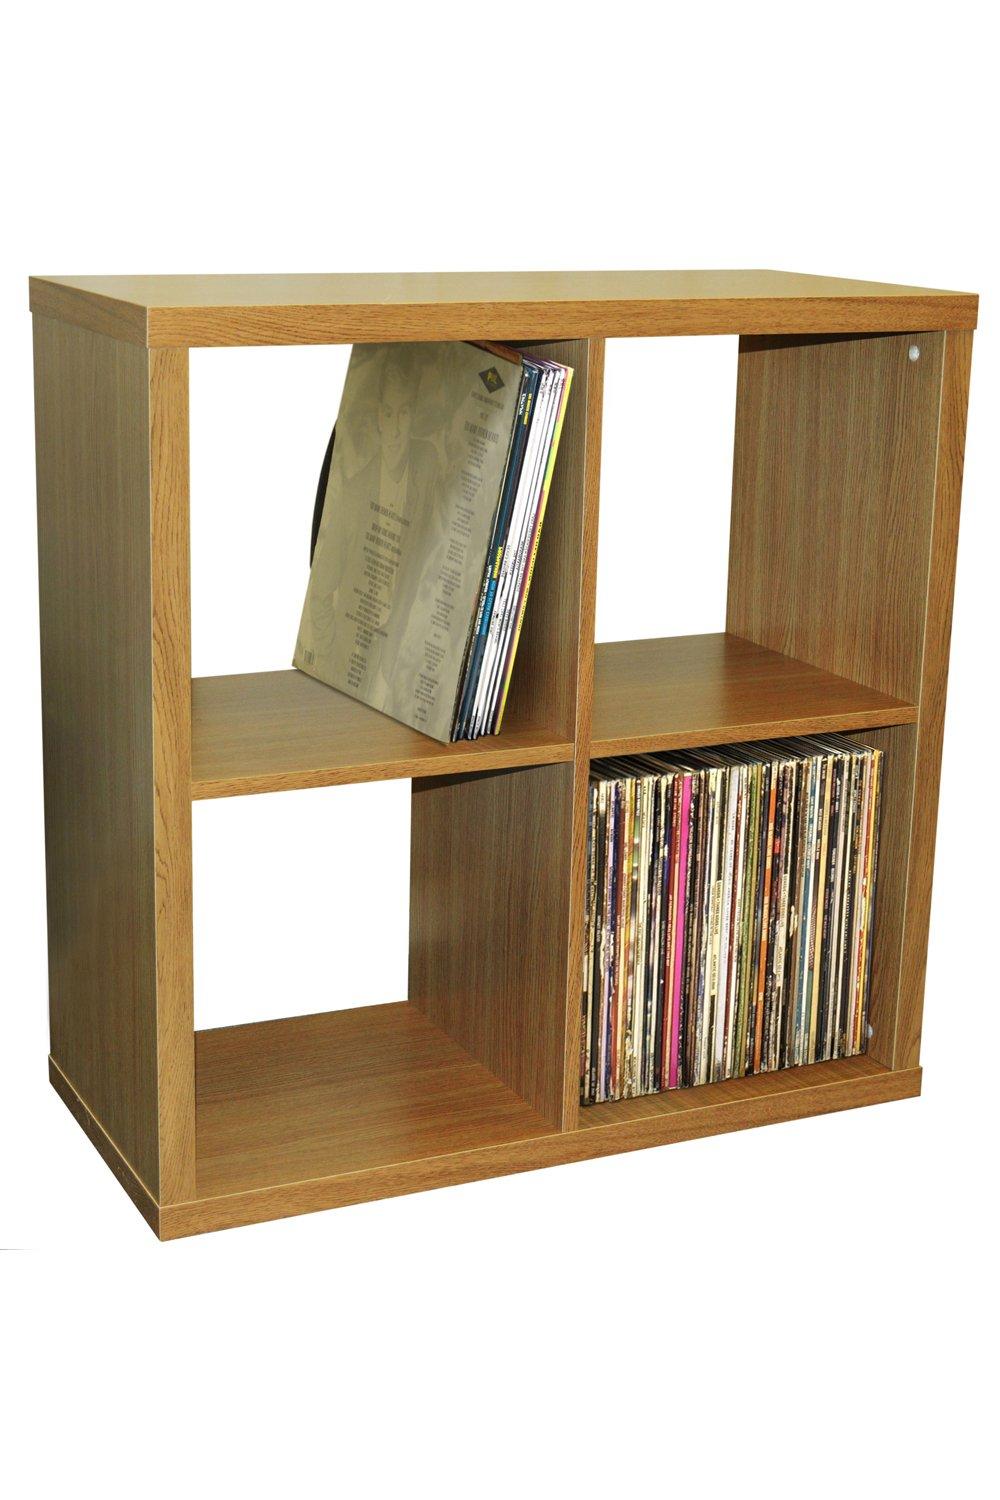 'Cube' - 4 Cubby Square Display Shelves / Vinyl Lp Record Storage - Oak